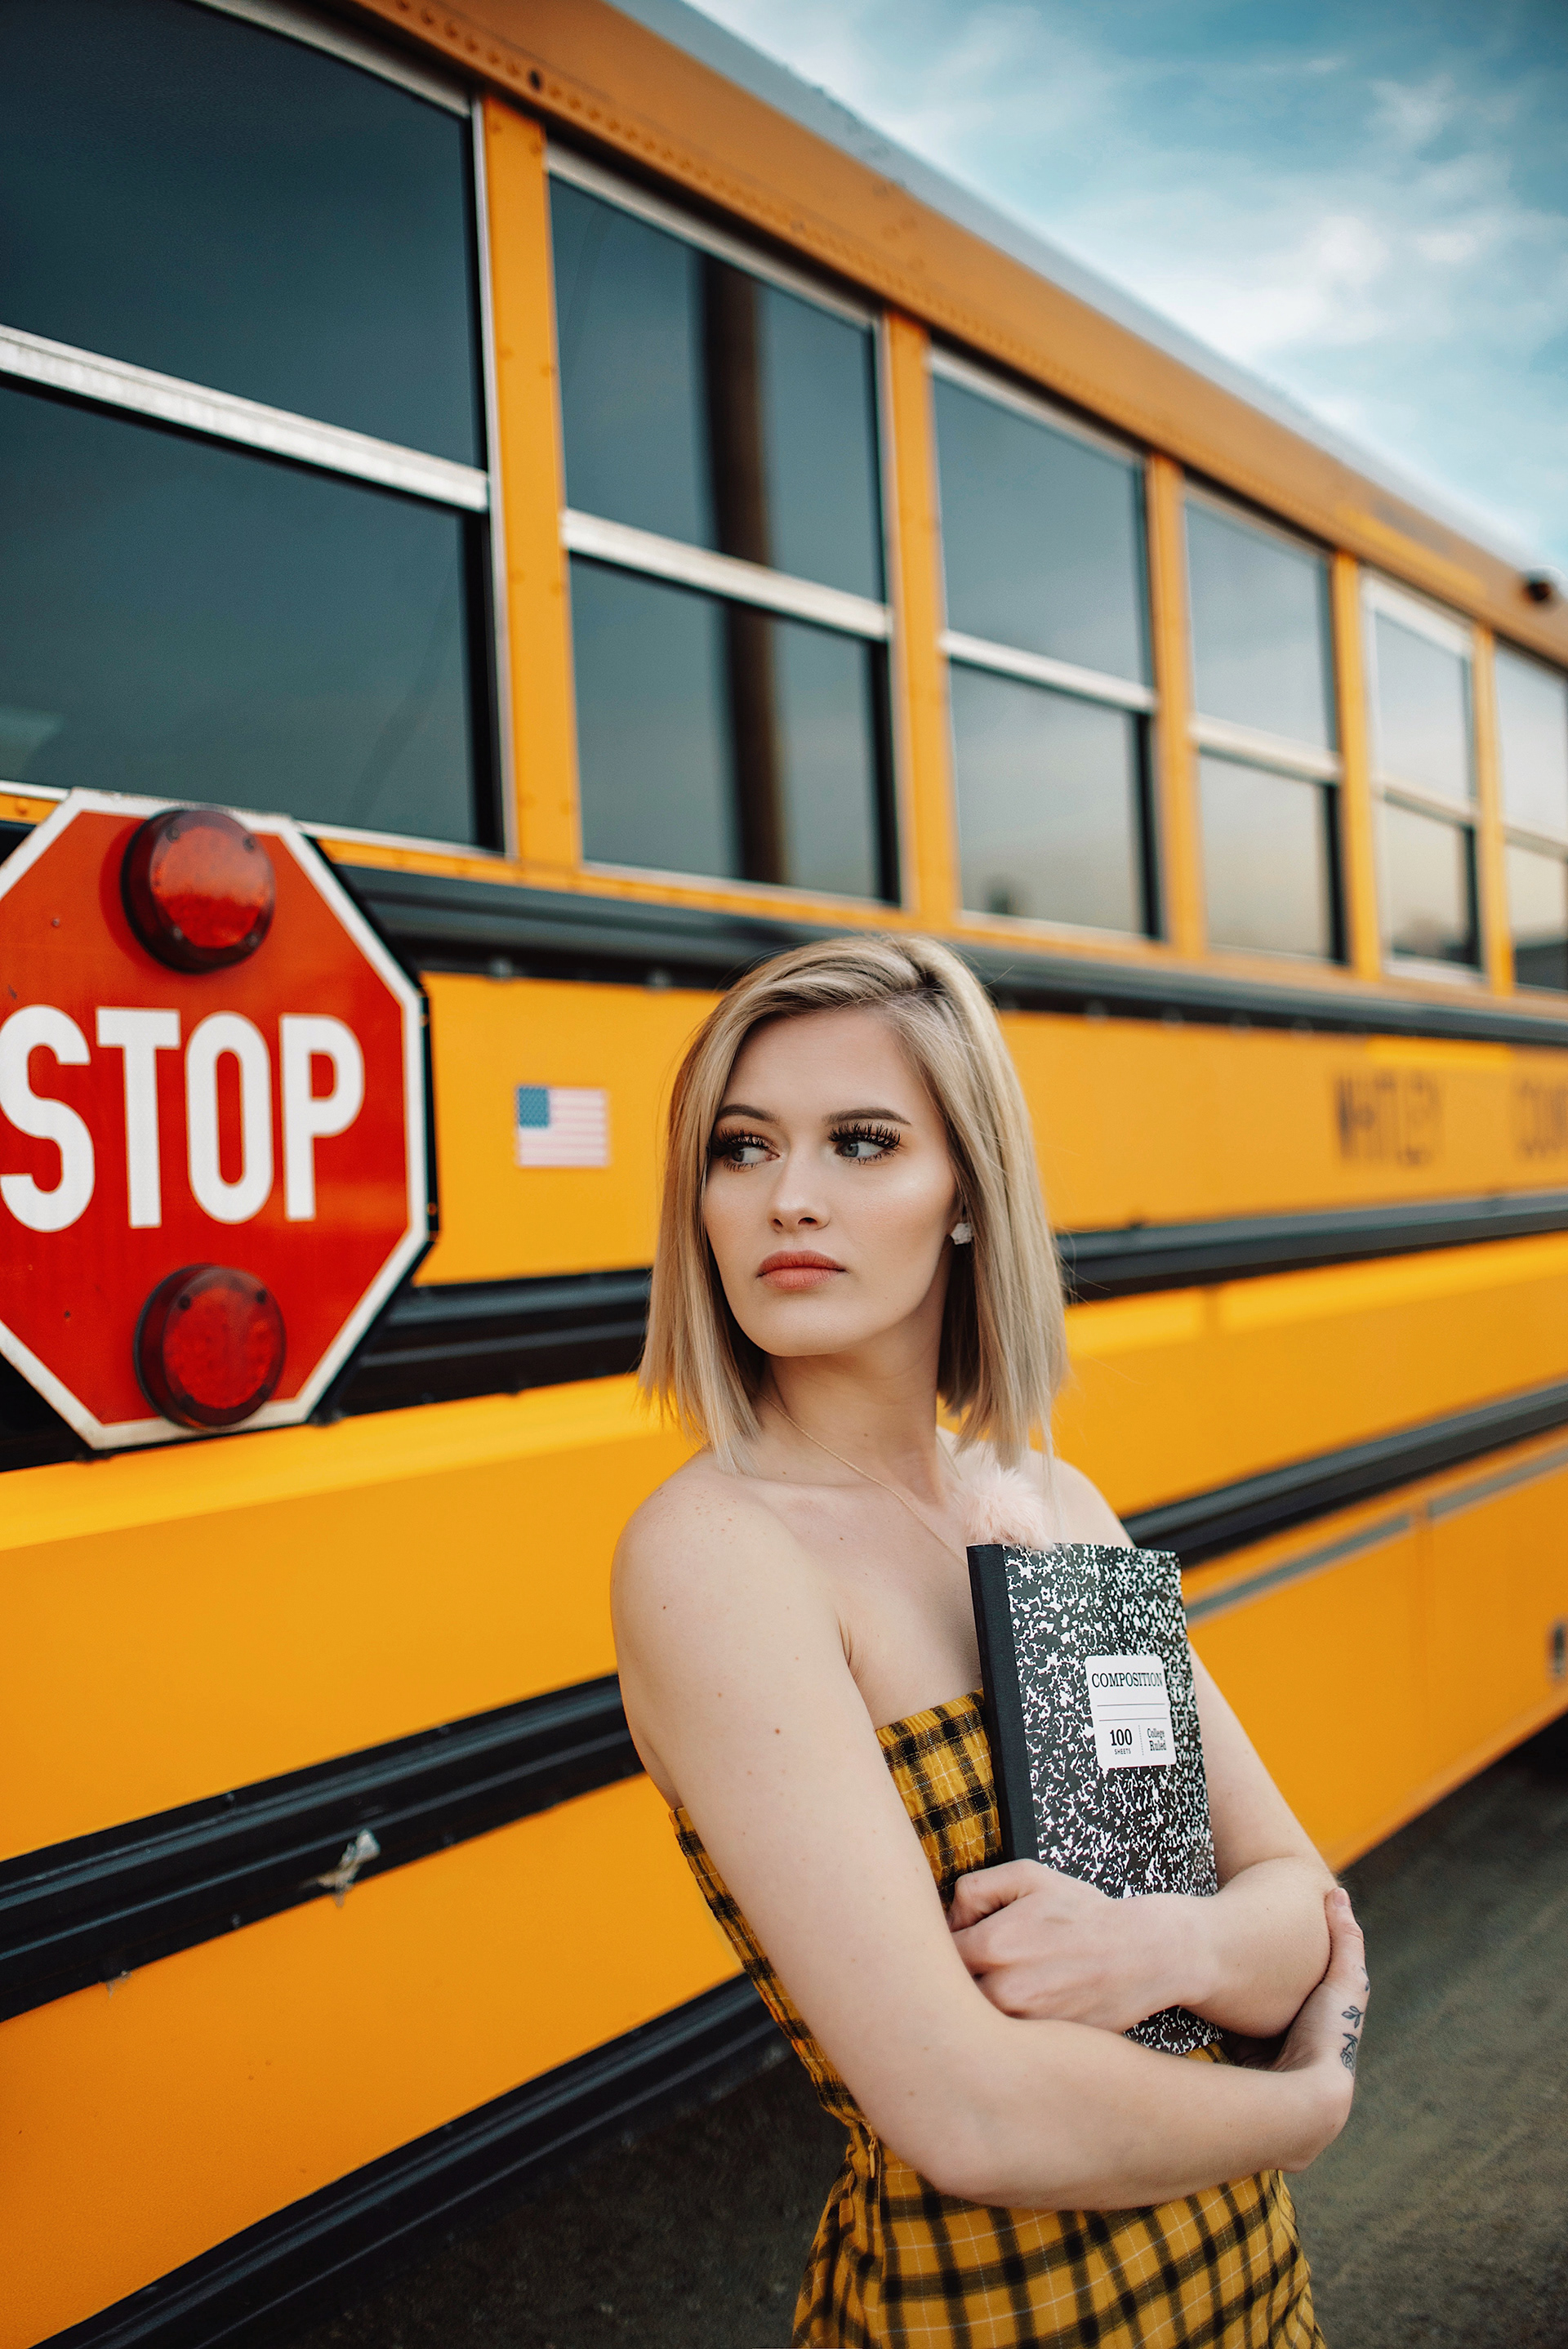 People 1920x2876 women women outdoors vehicle sign blonde makeup buses school bus portrait display